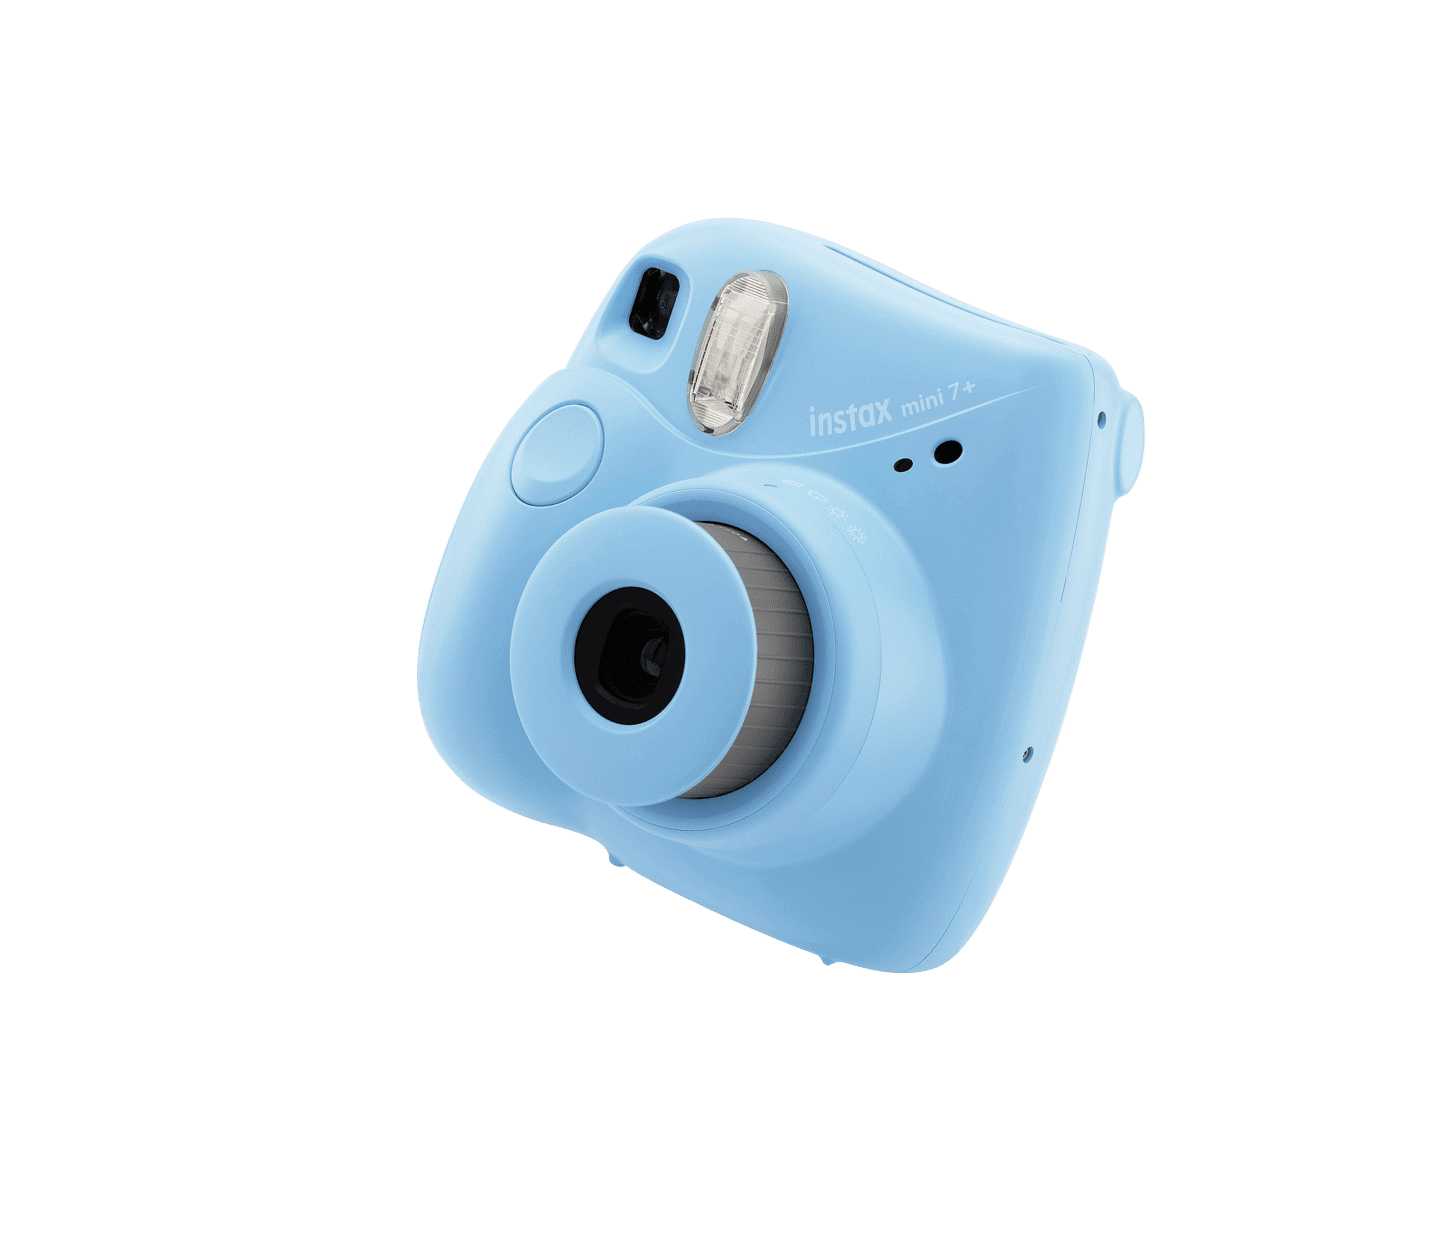 samen niezen hoek Mini 7 Plus Instant Camera | instax by Fujifilm Photography